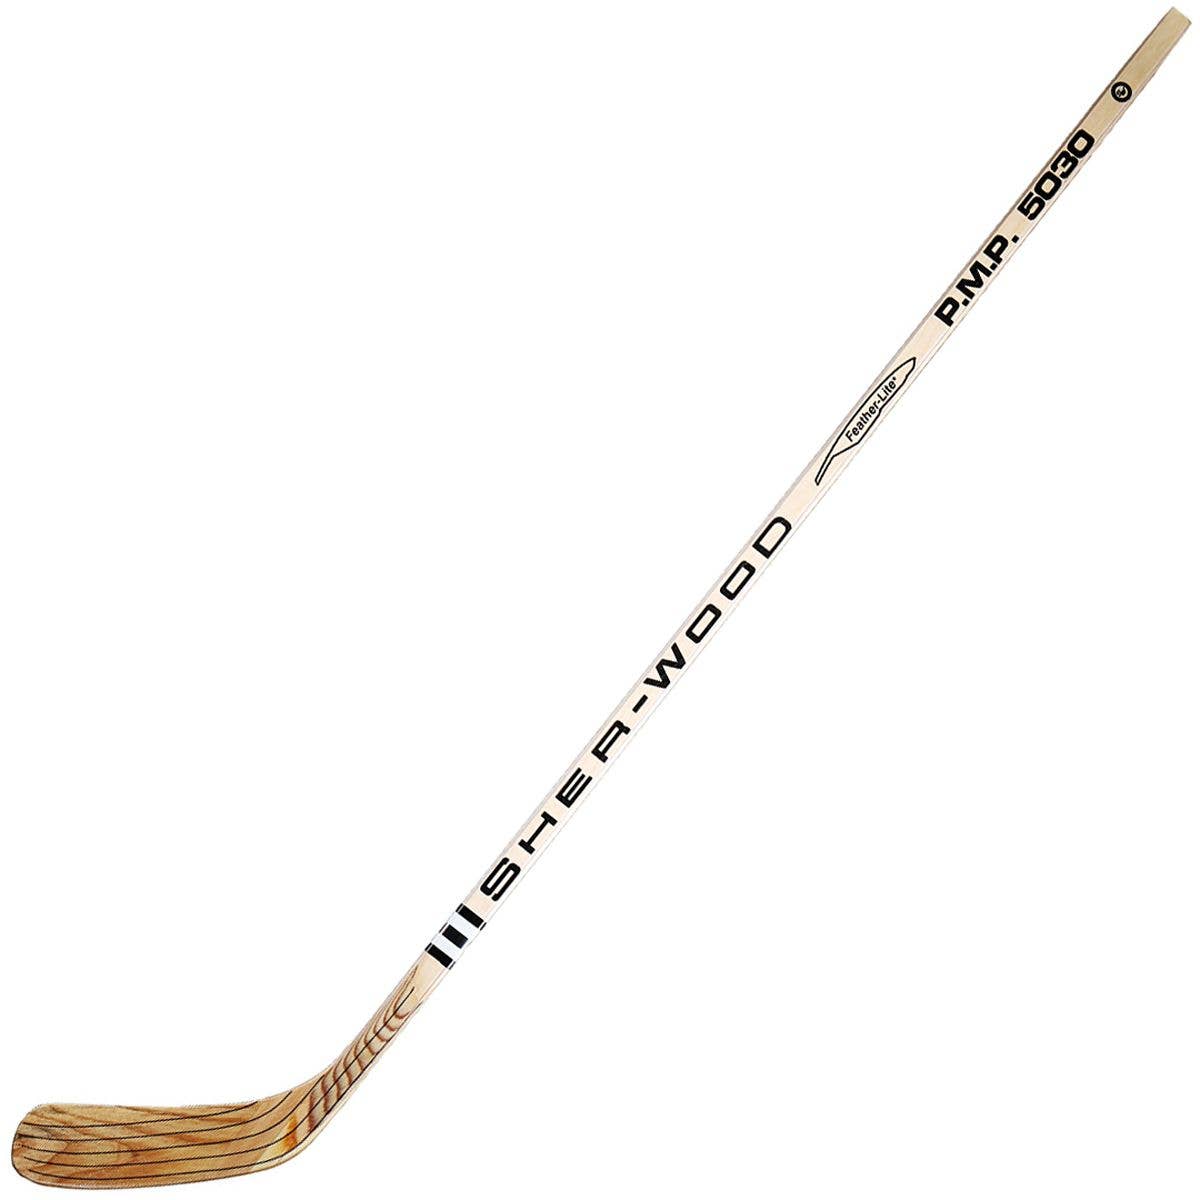 sherwood-hockey-stick-pmp-5030-sr_1.jpg